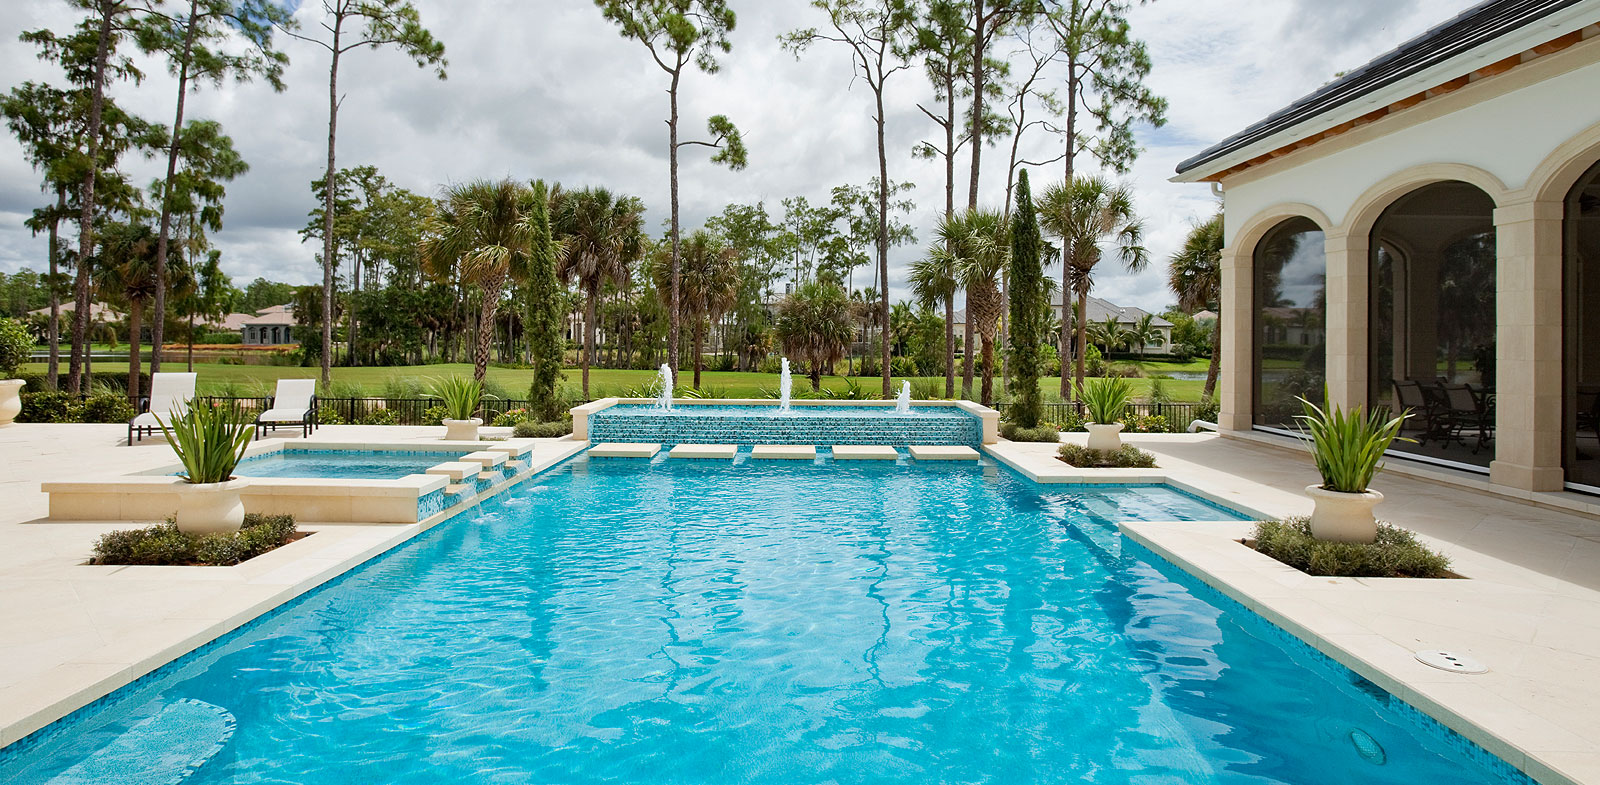 Luxury home outdoor pool